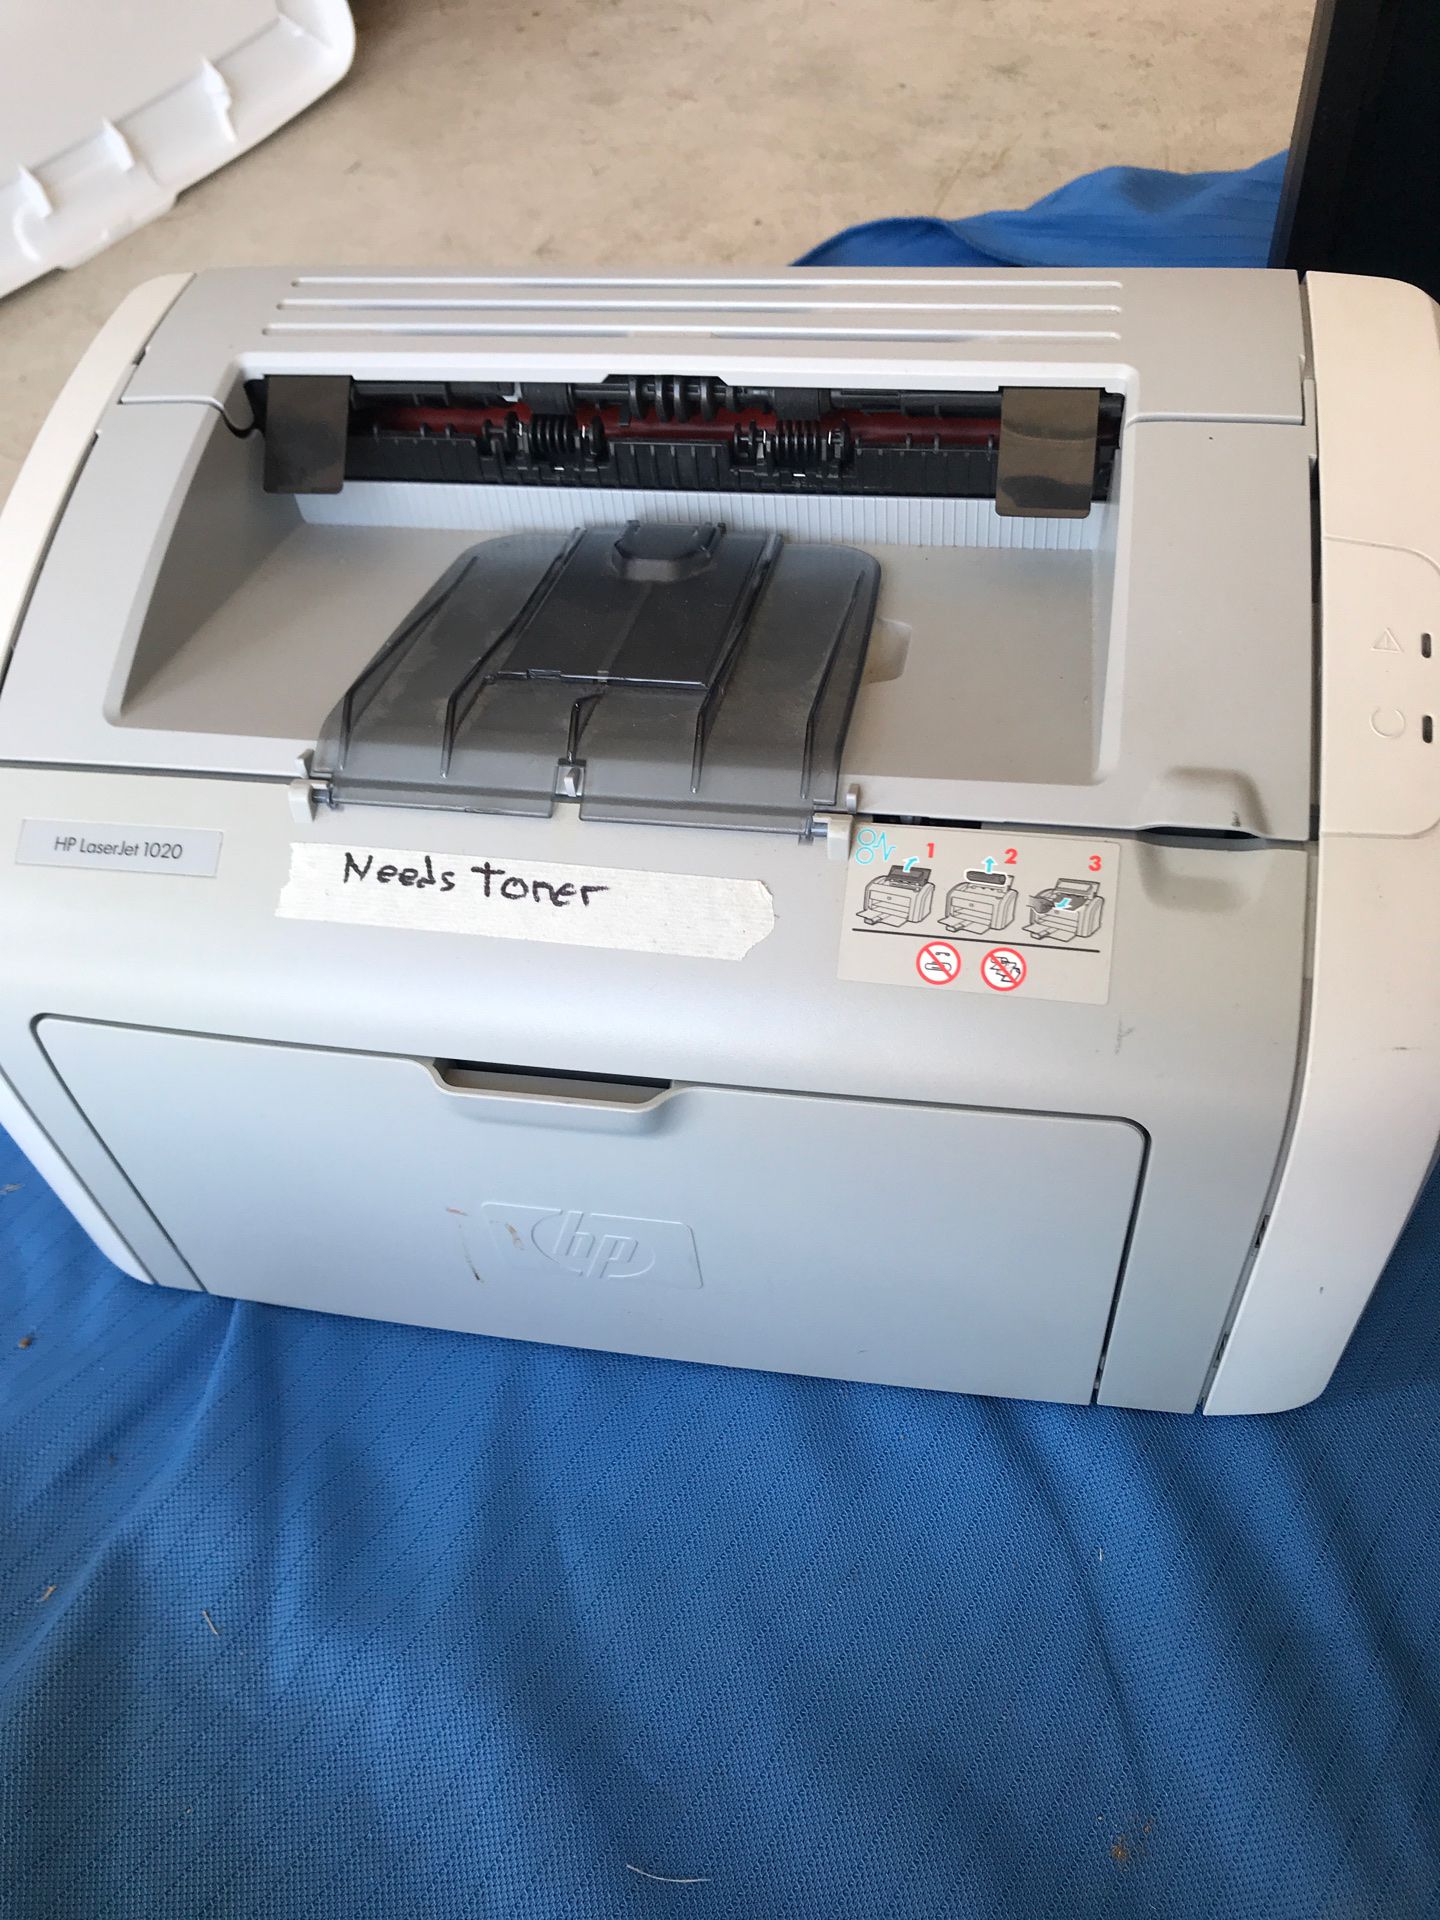 HP laser jet 1020 printer , needs toner& power cord